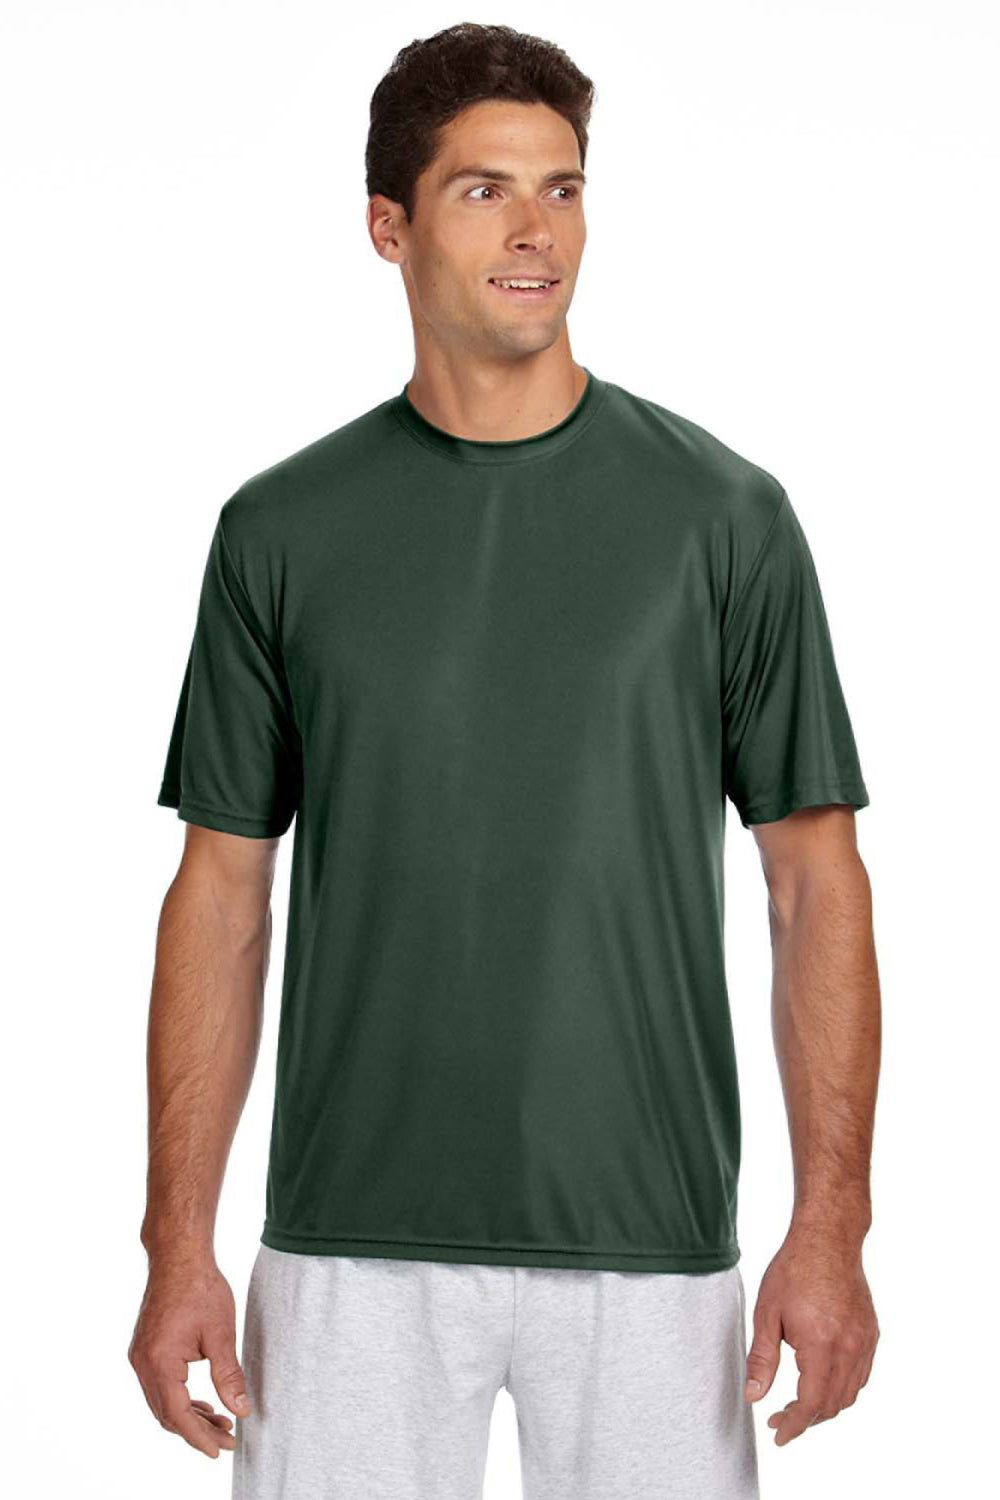 A4 N3142 Mens Performance Moisture Wicking Short Sleeve Crewneck T-Shirt Forest Green Model Front